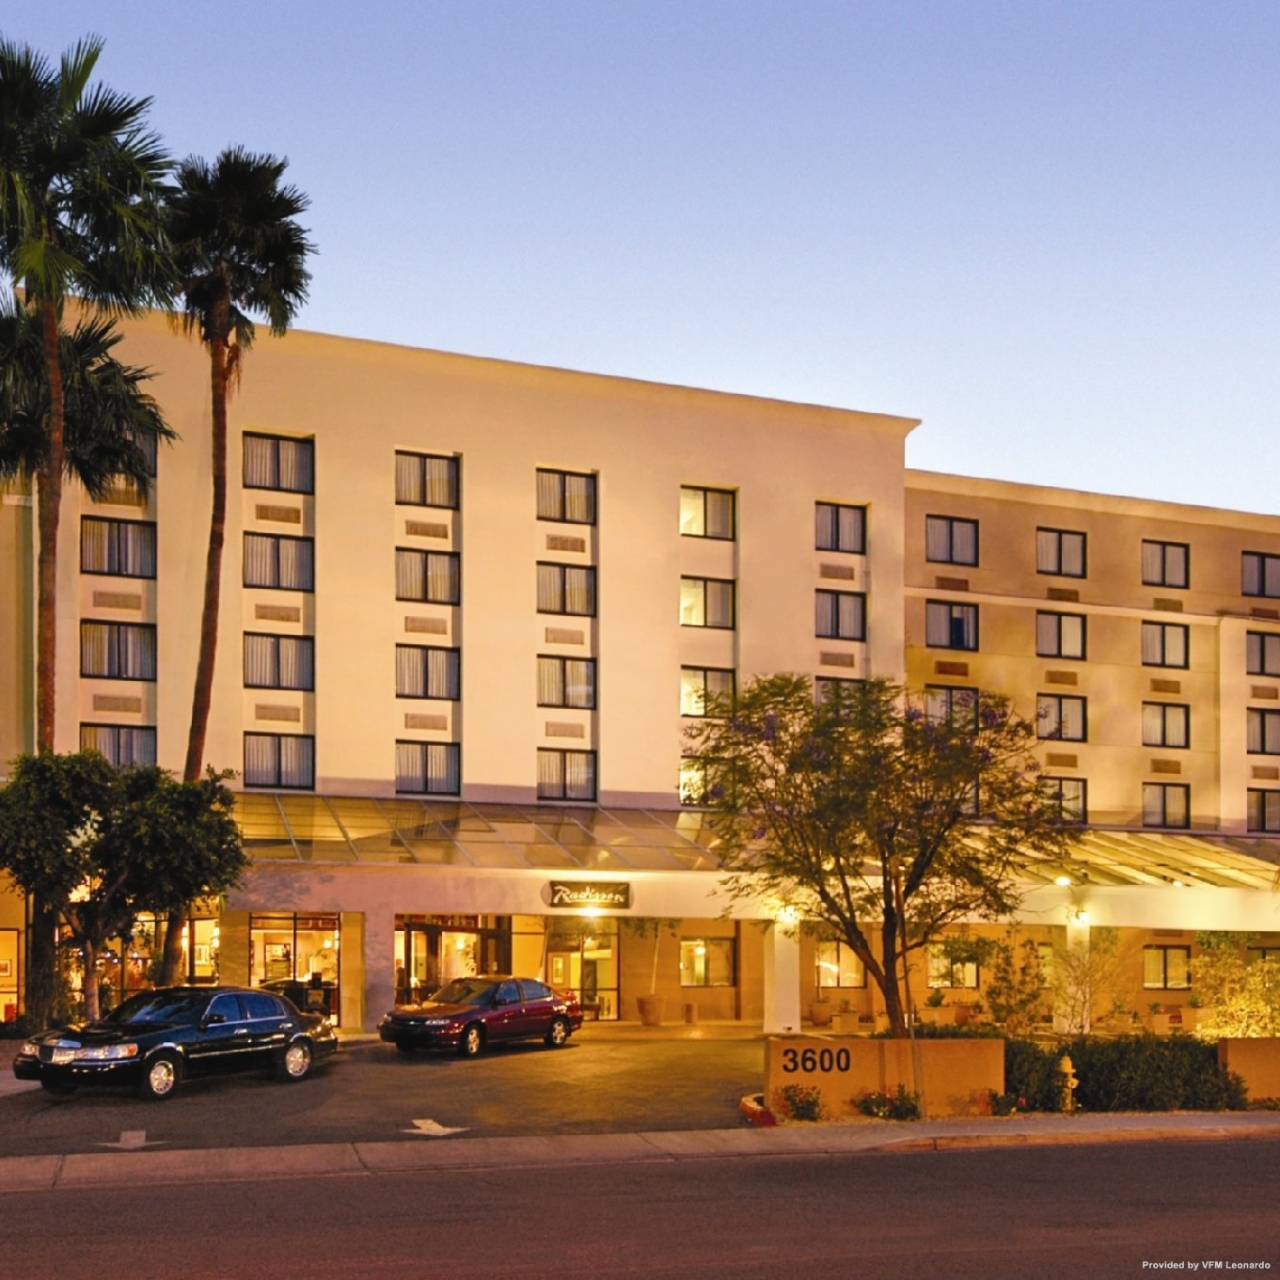 Hotel Wyndham Garden Phoenix Midtown In Phoenix Arizona Hrs